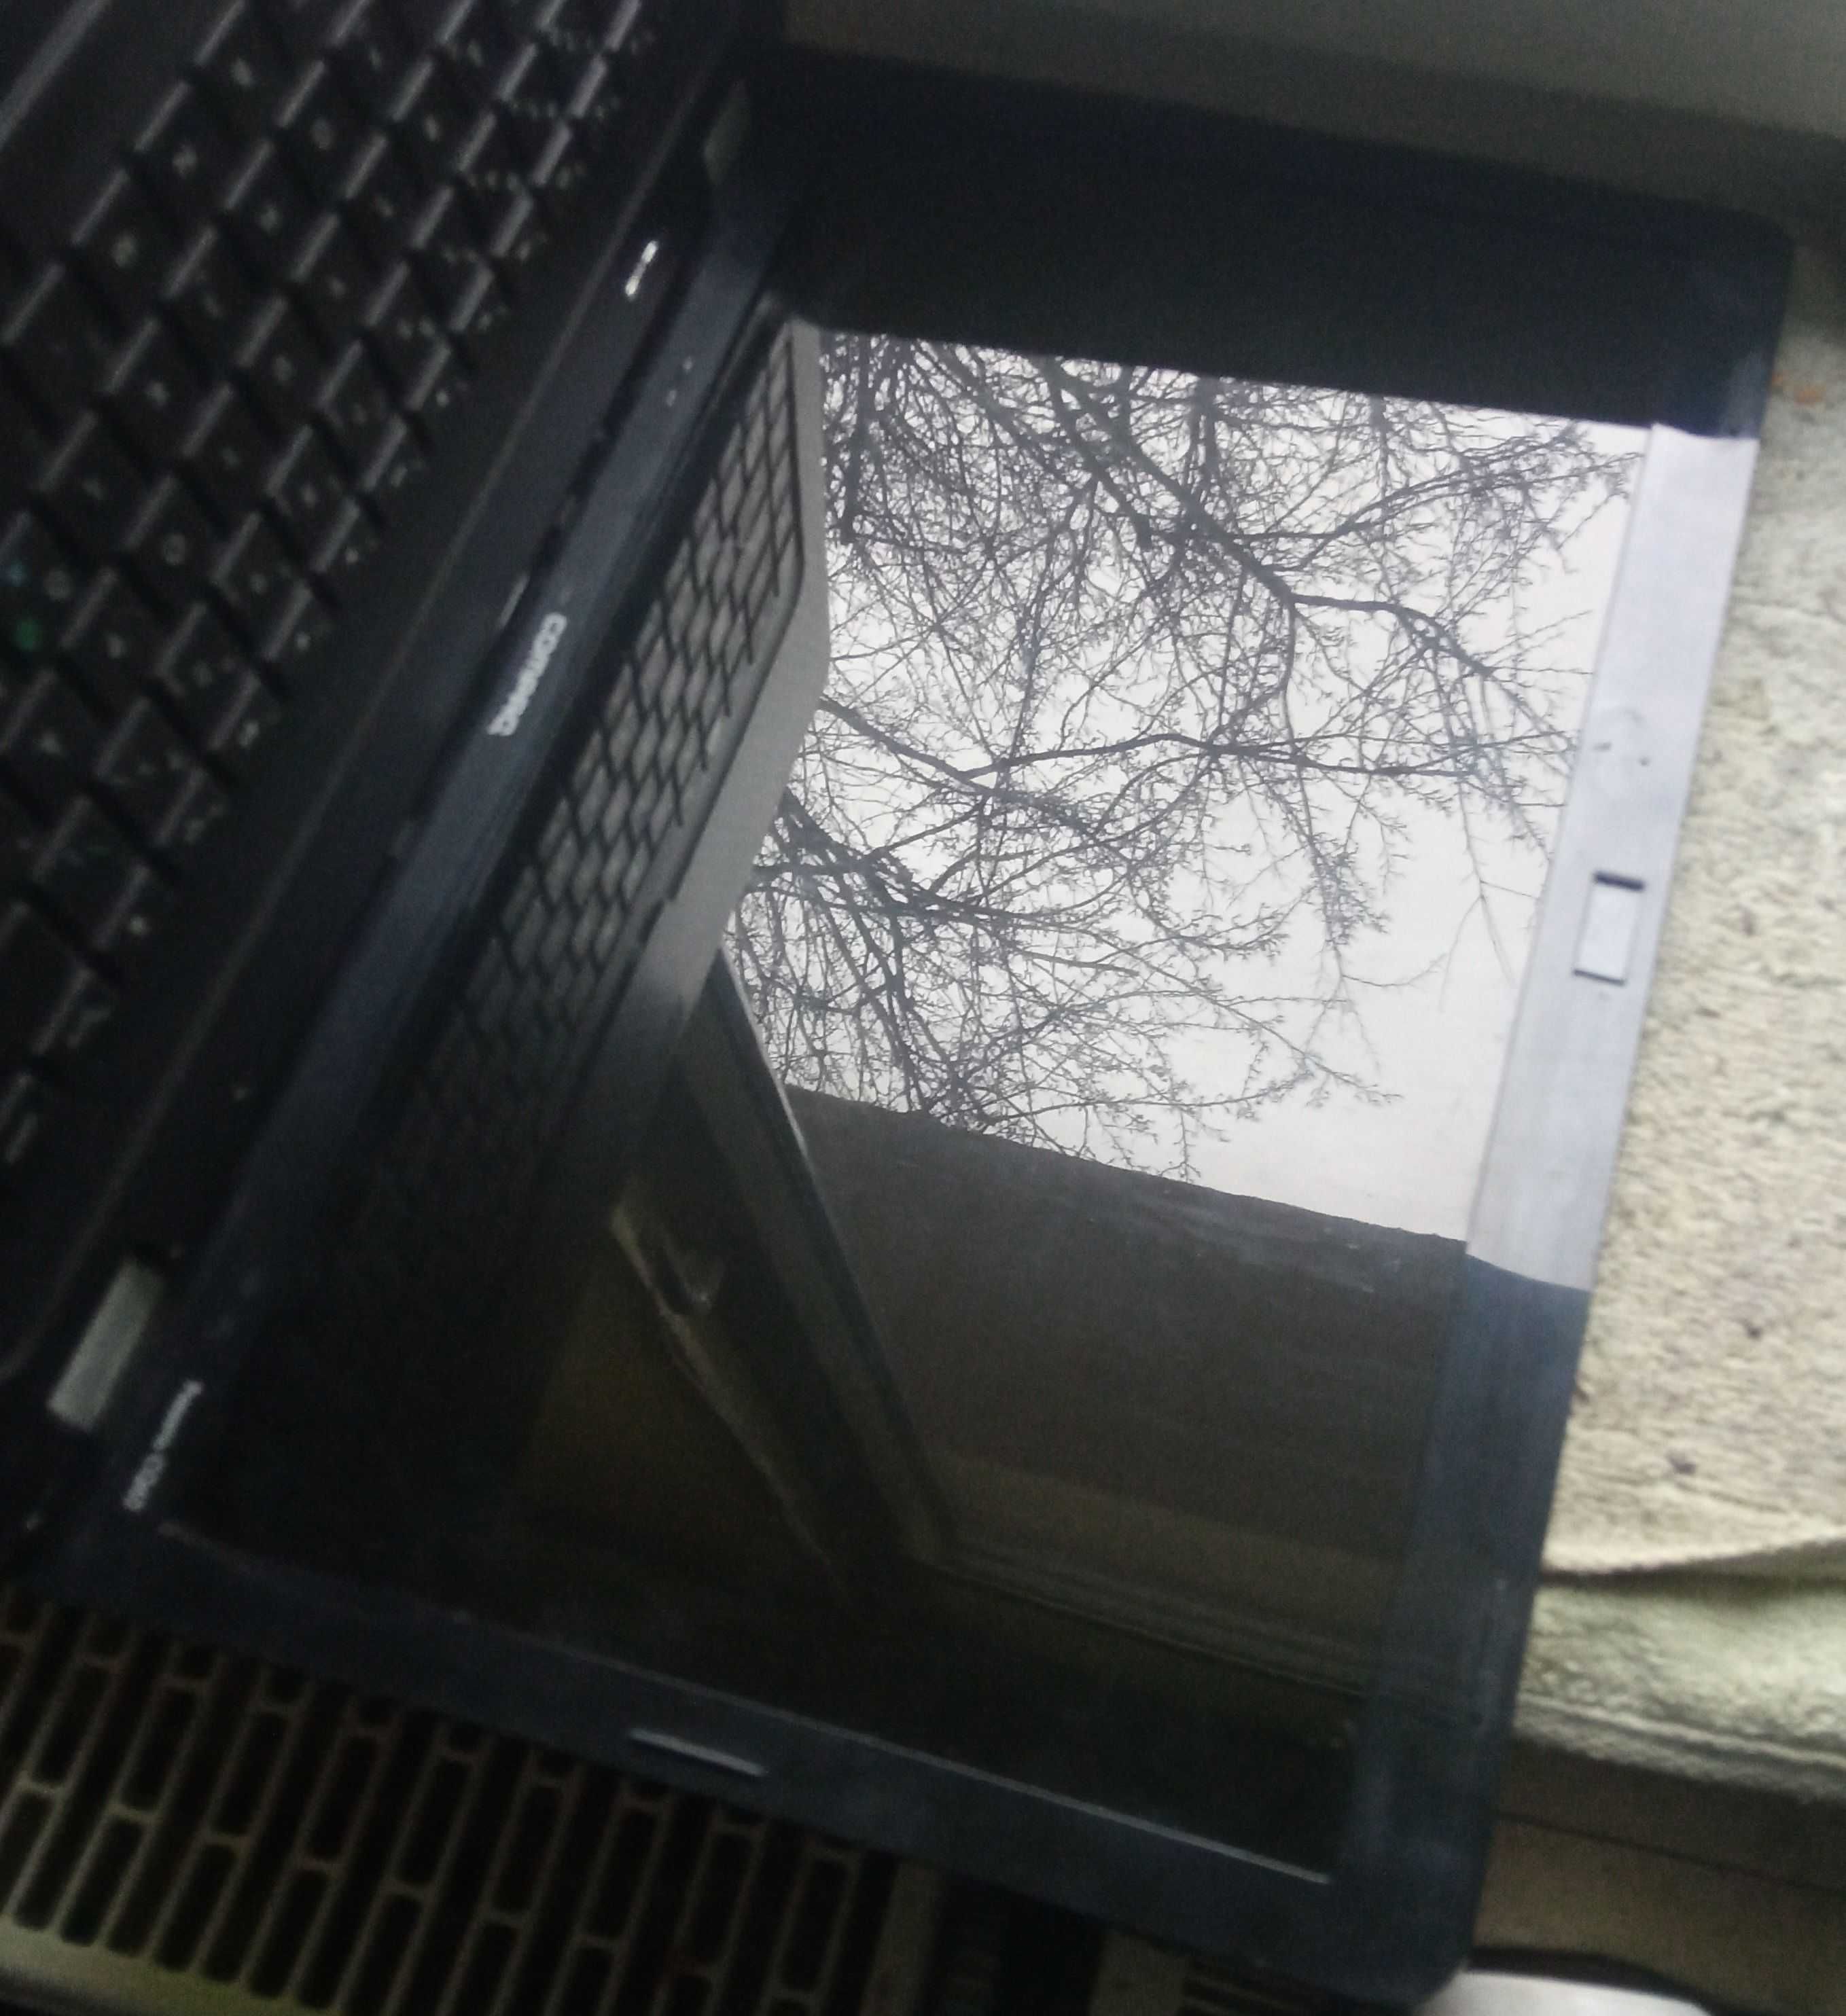 laptop HP/Compaq CQ62